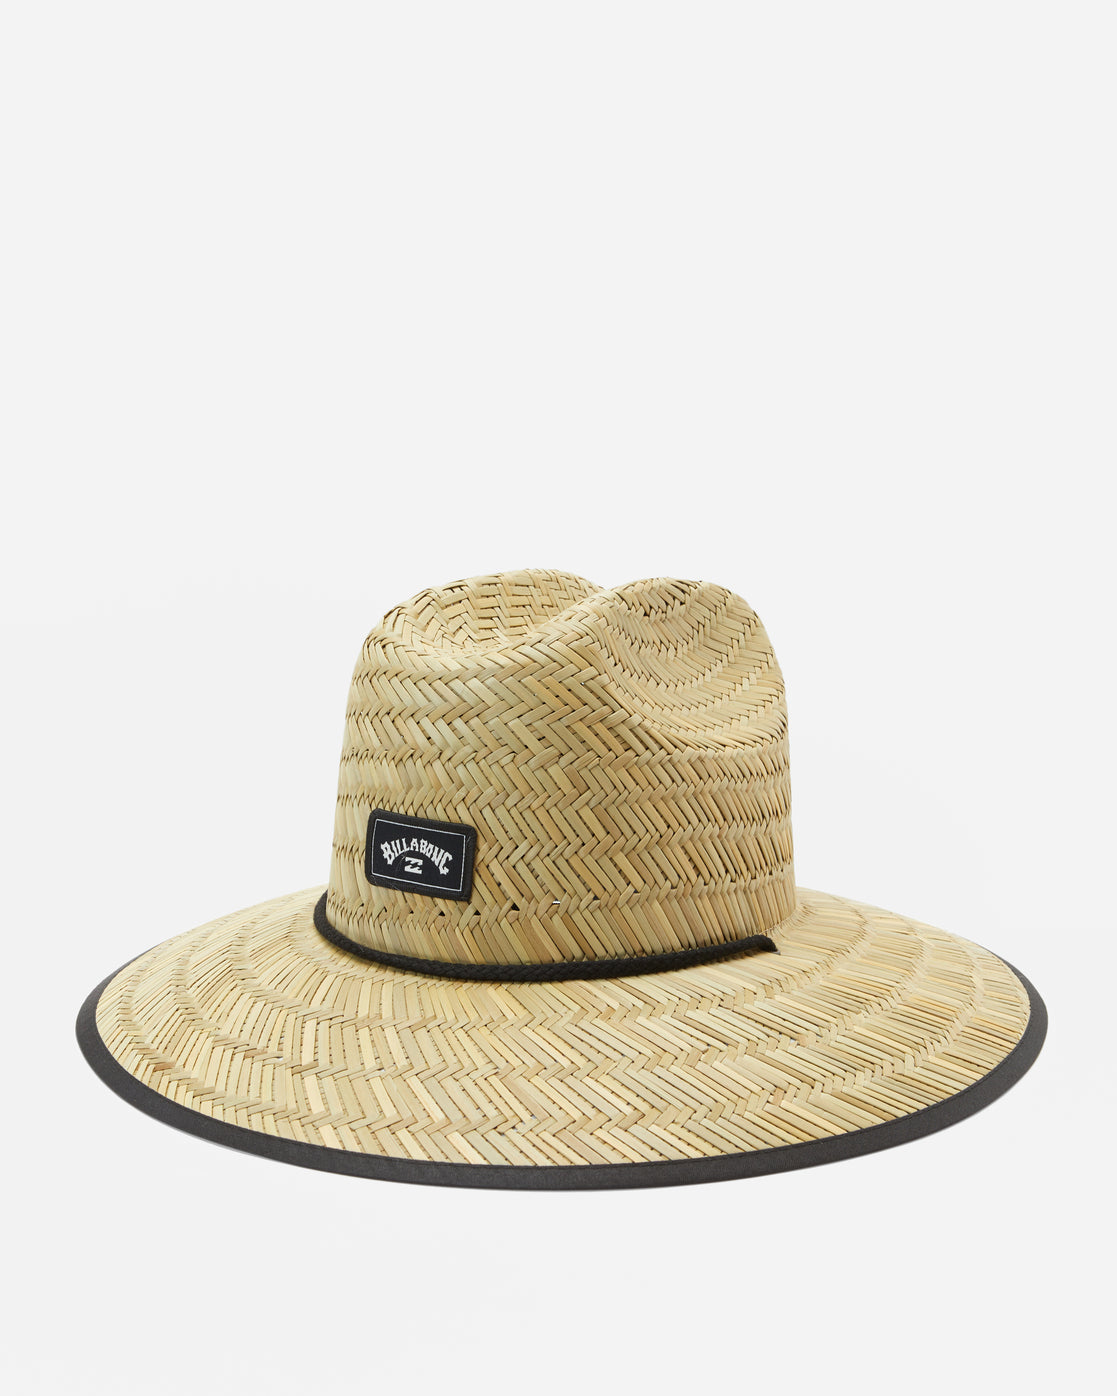 Tides Print Straw Lifeguard Hat - Asphalt